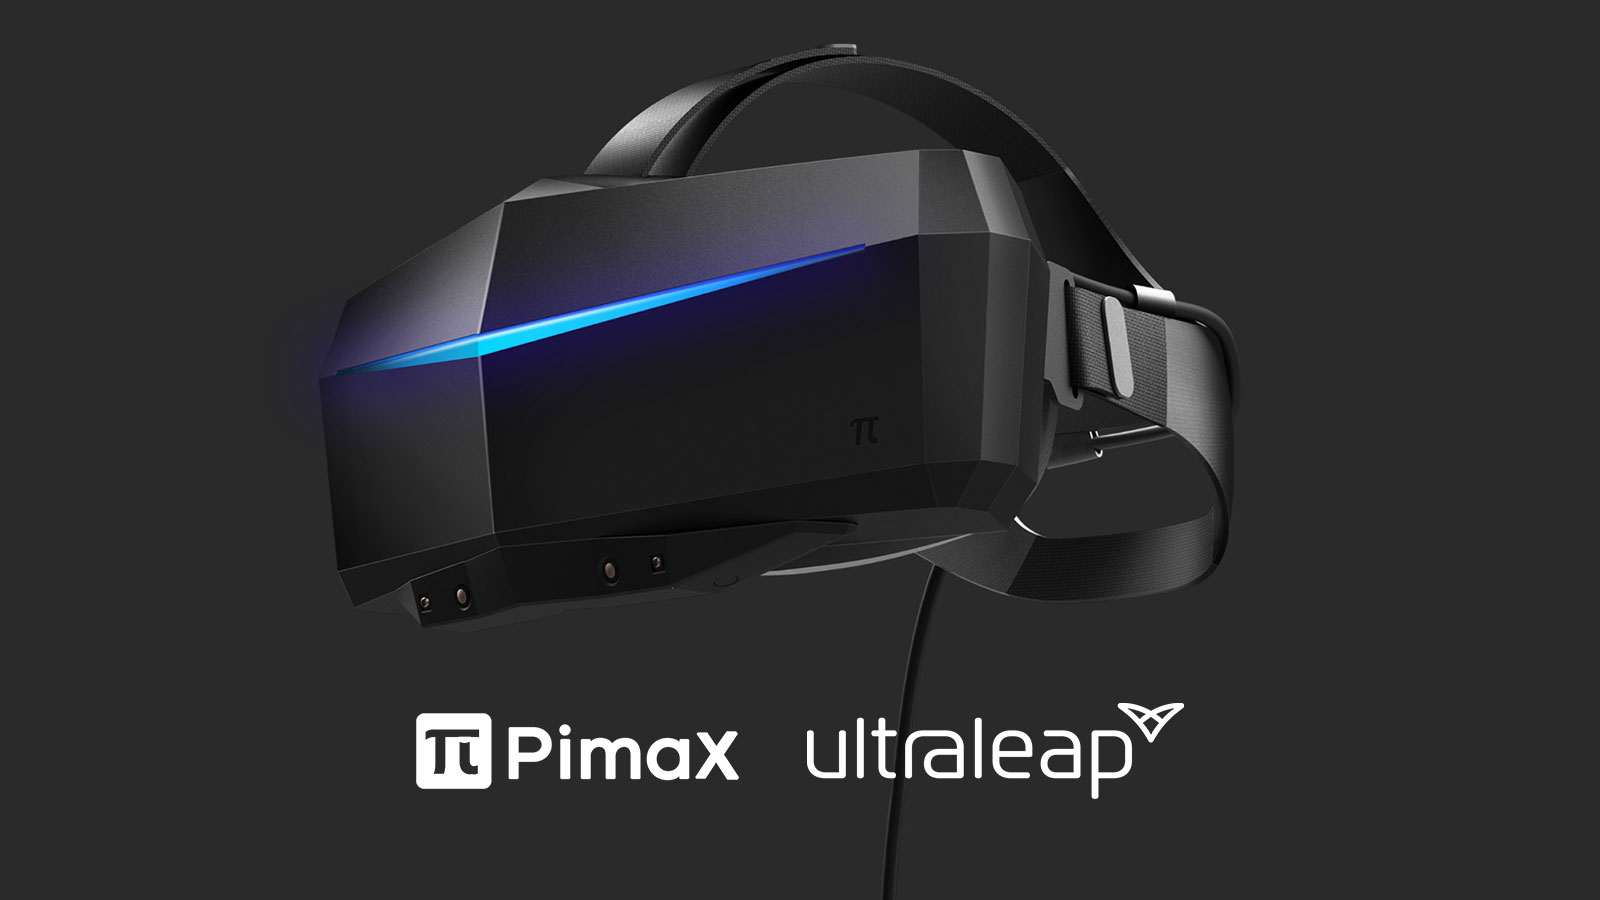 Pimax headset ultraleap hand tracking